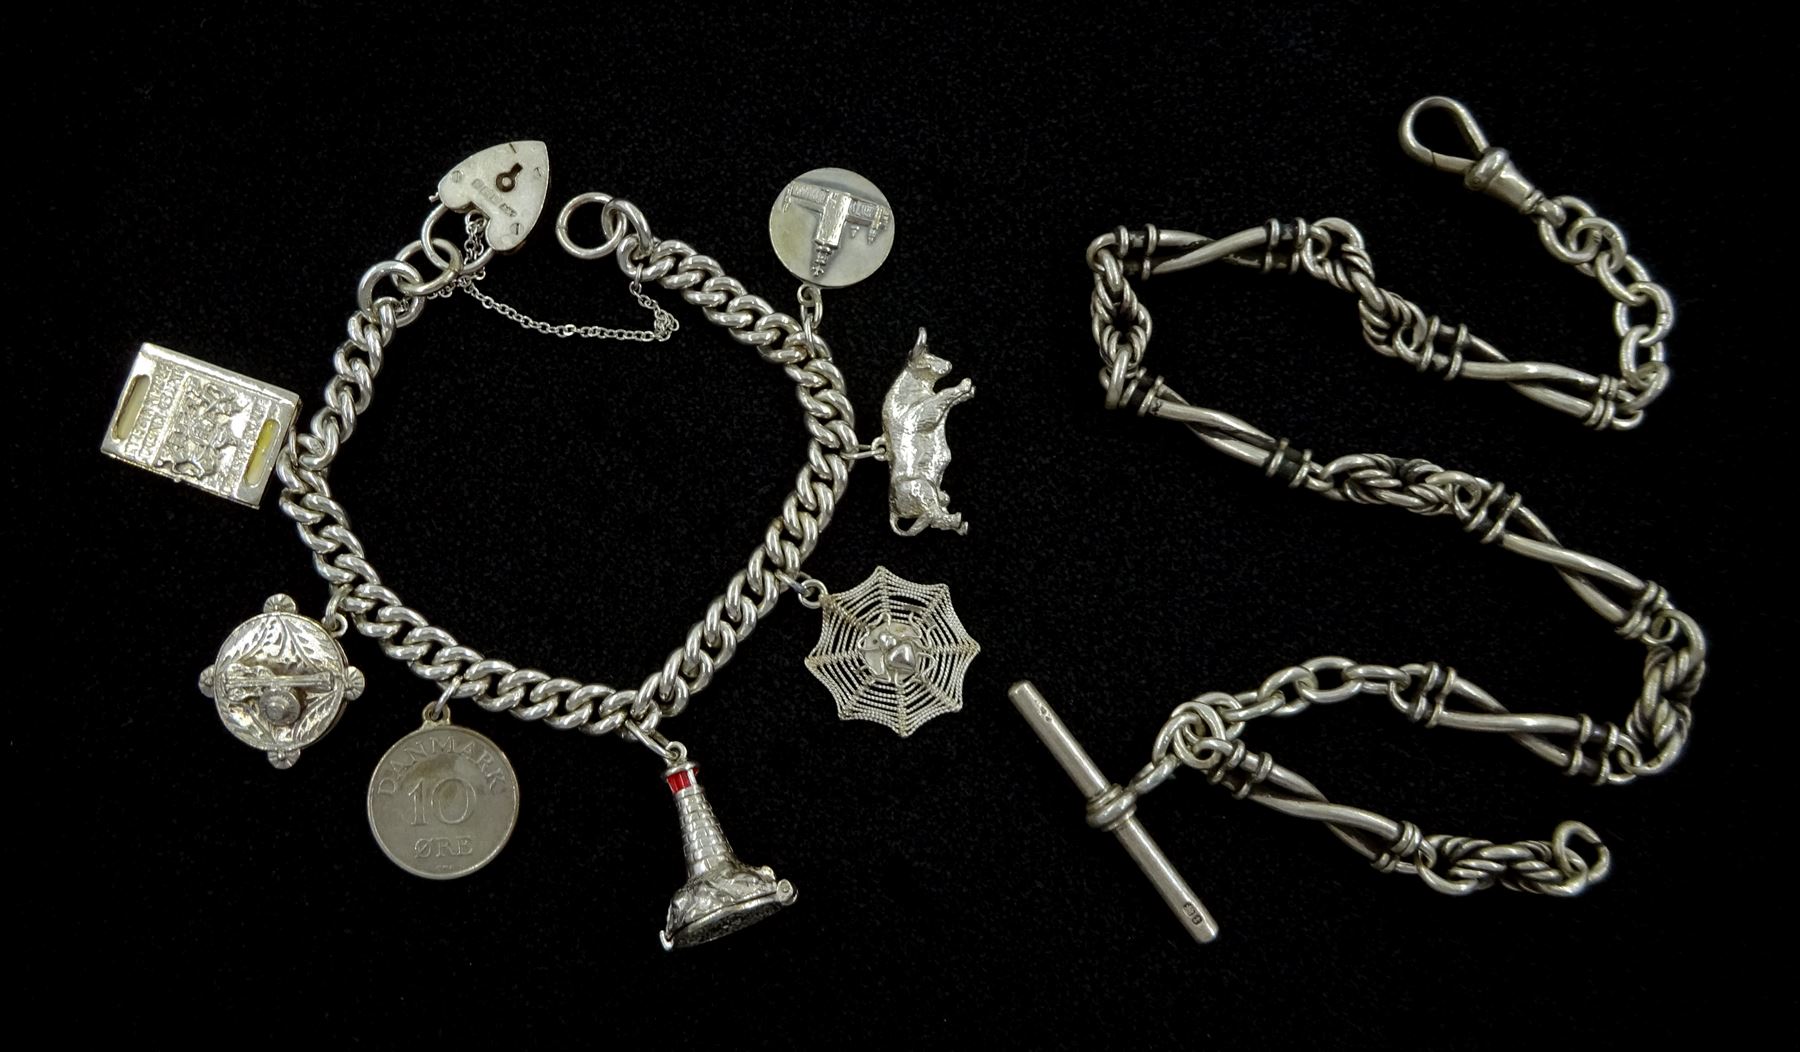 Silver charm bracelet charms including lighthouse